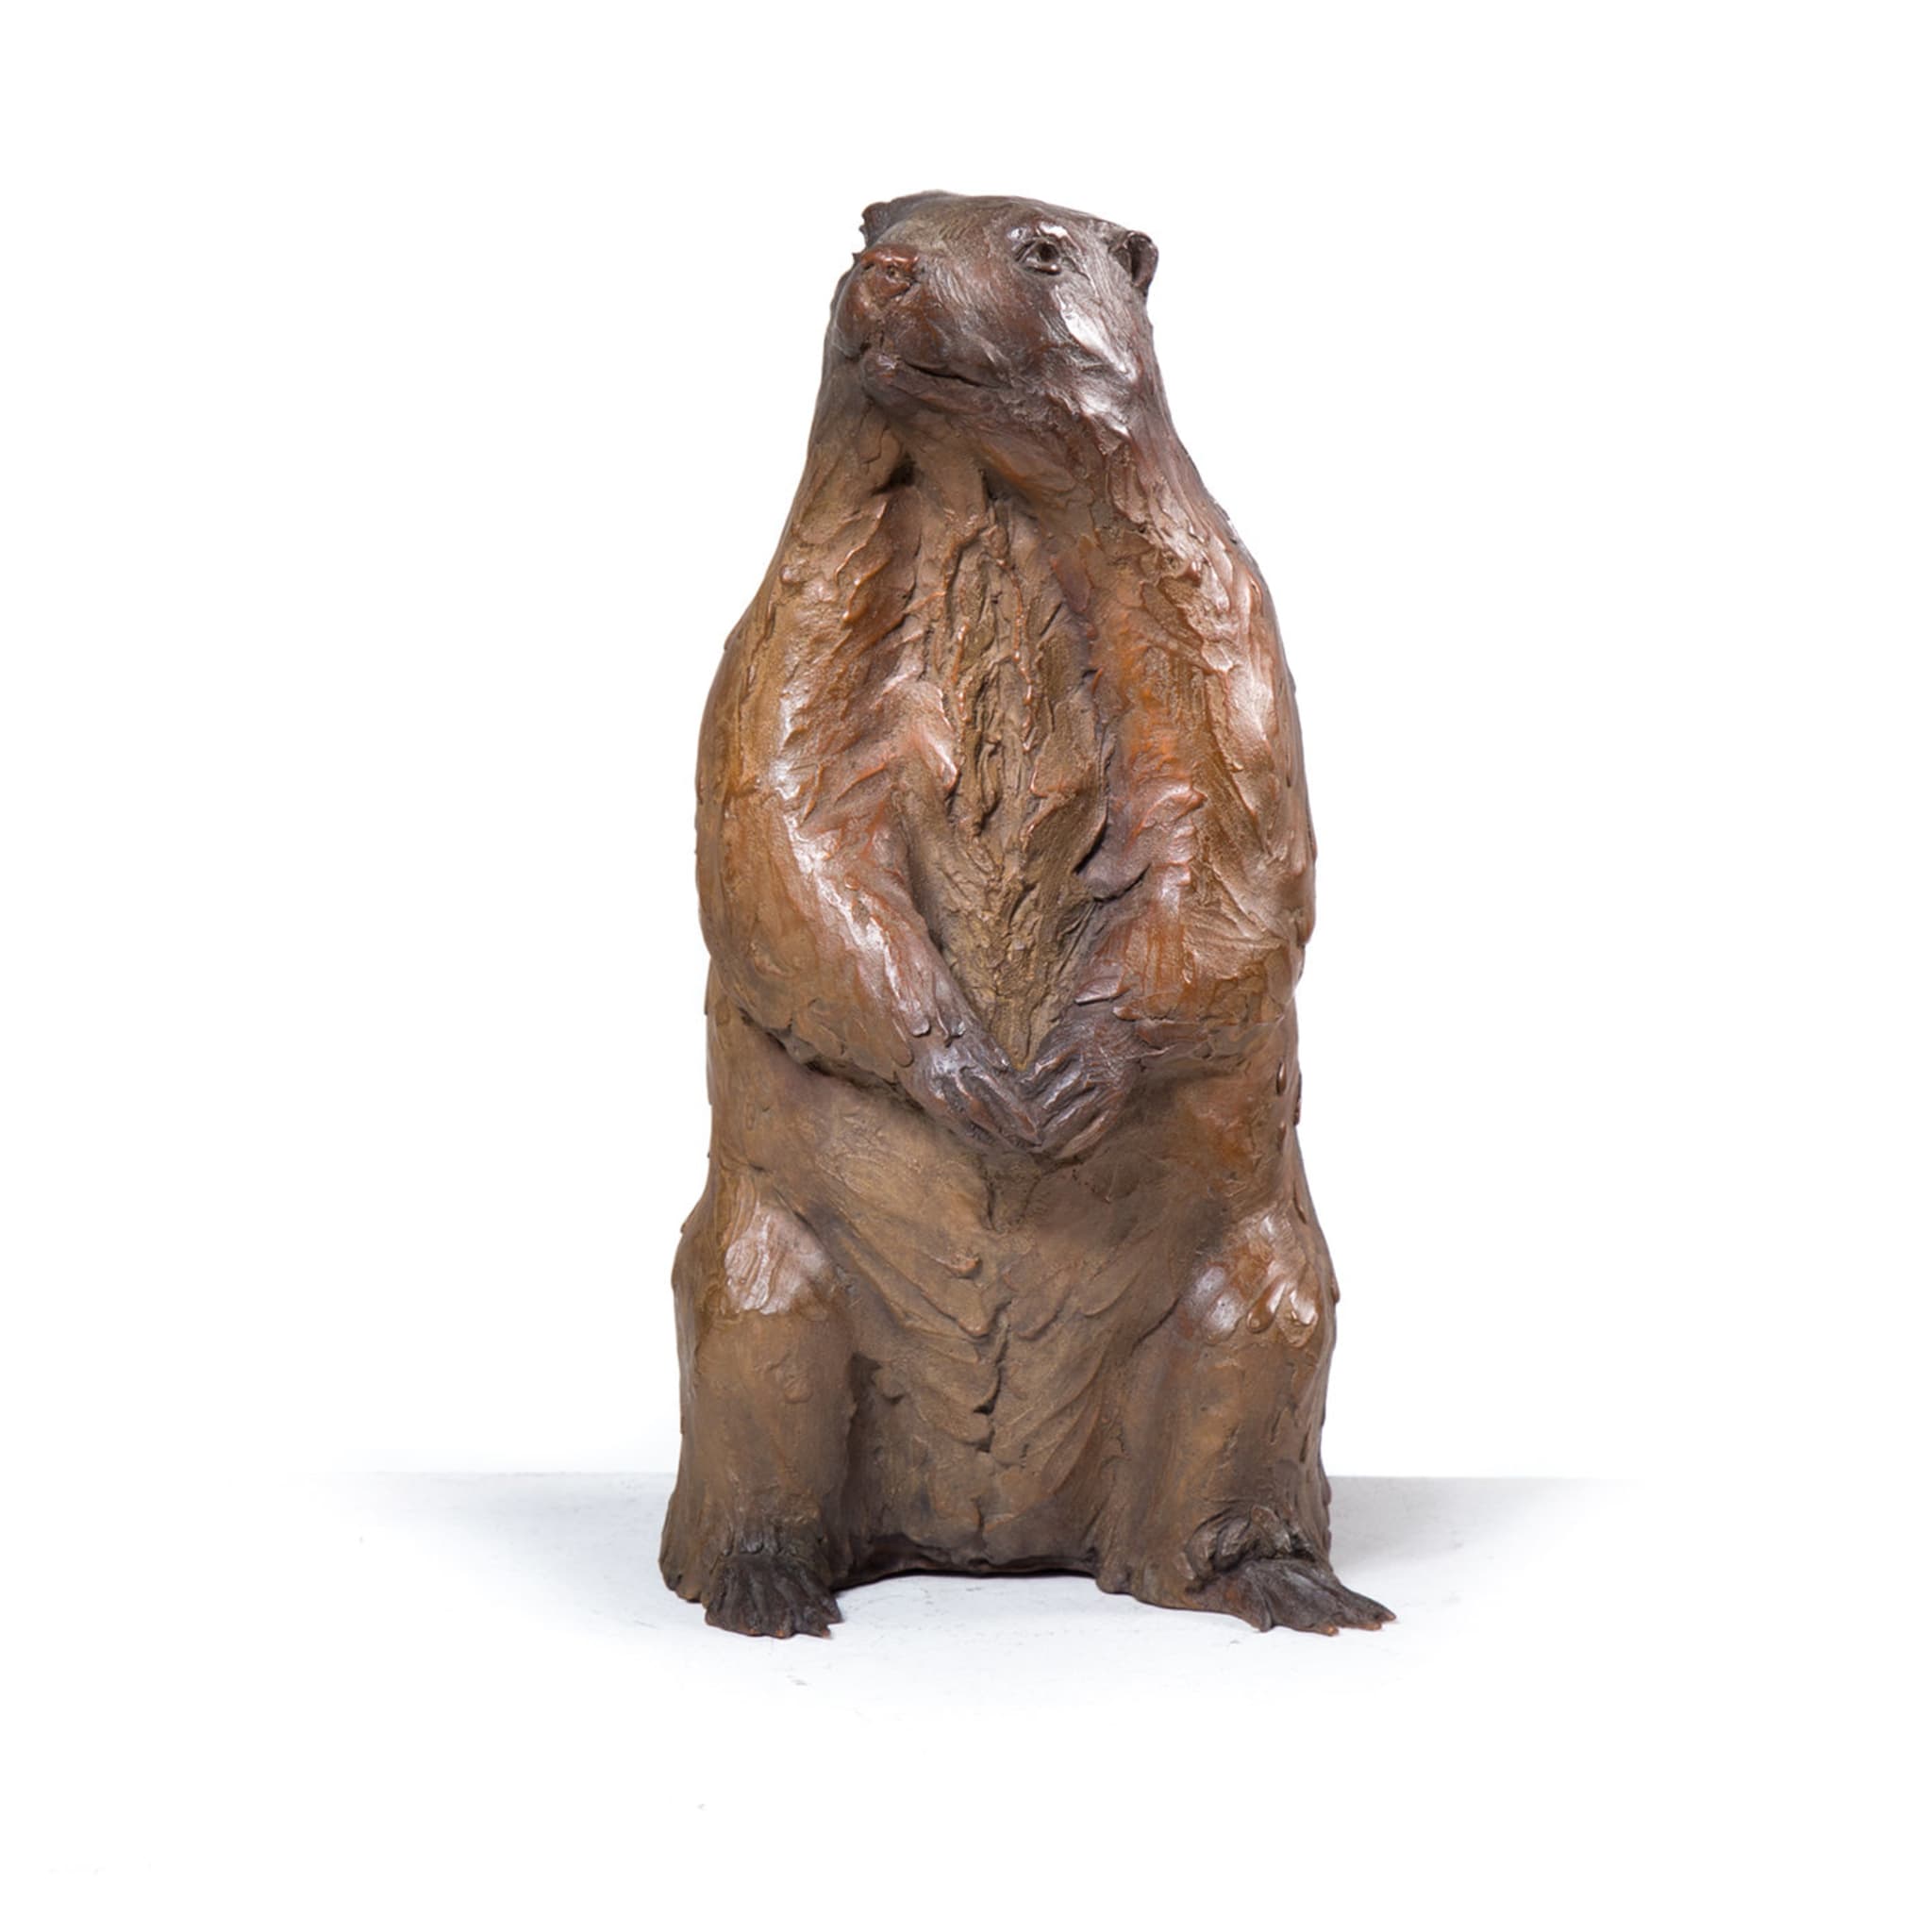 Marmot Sculpture - Alternative view 1